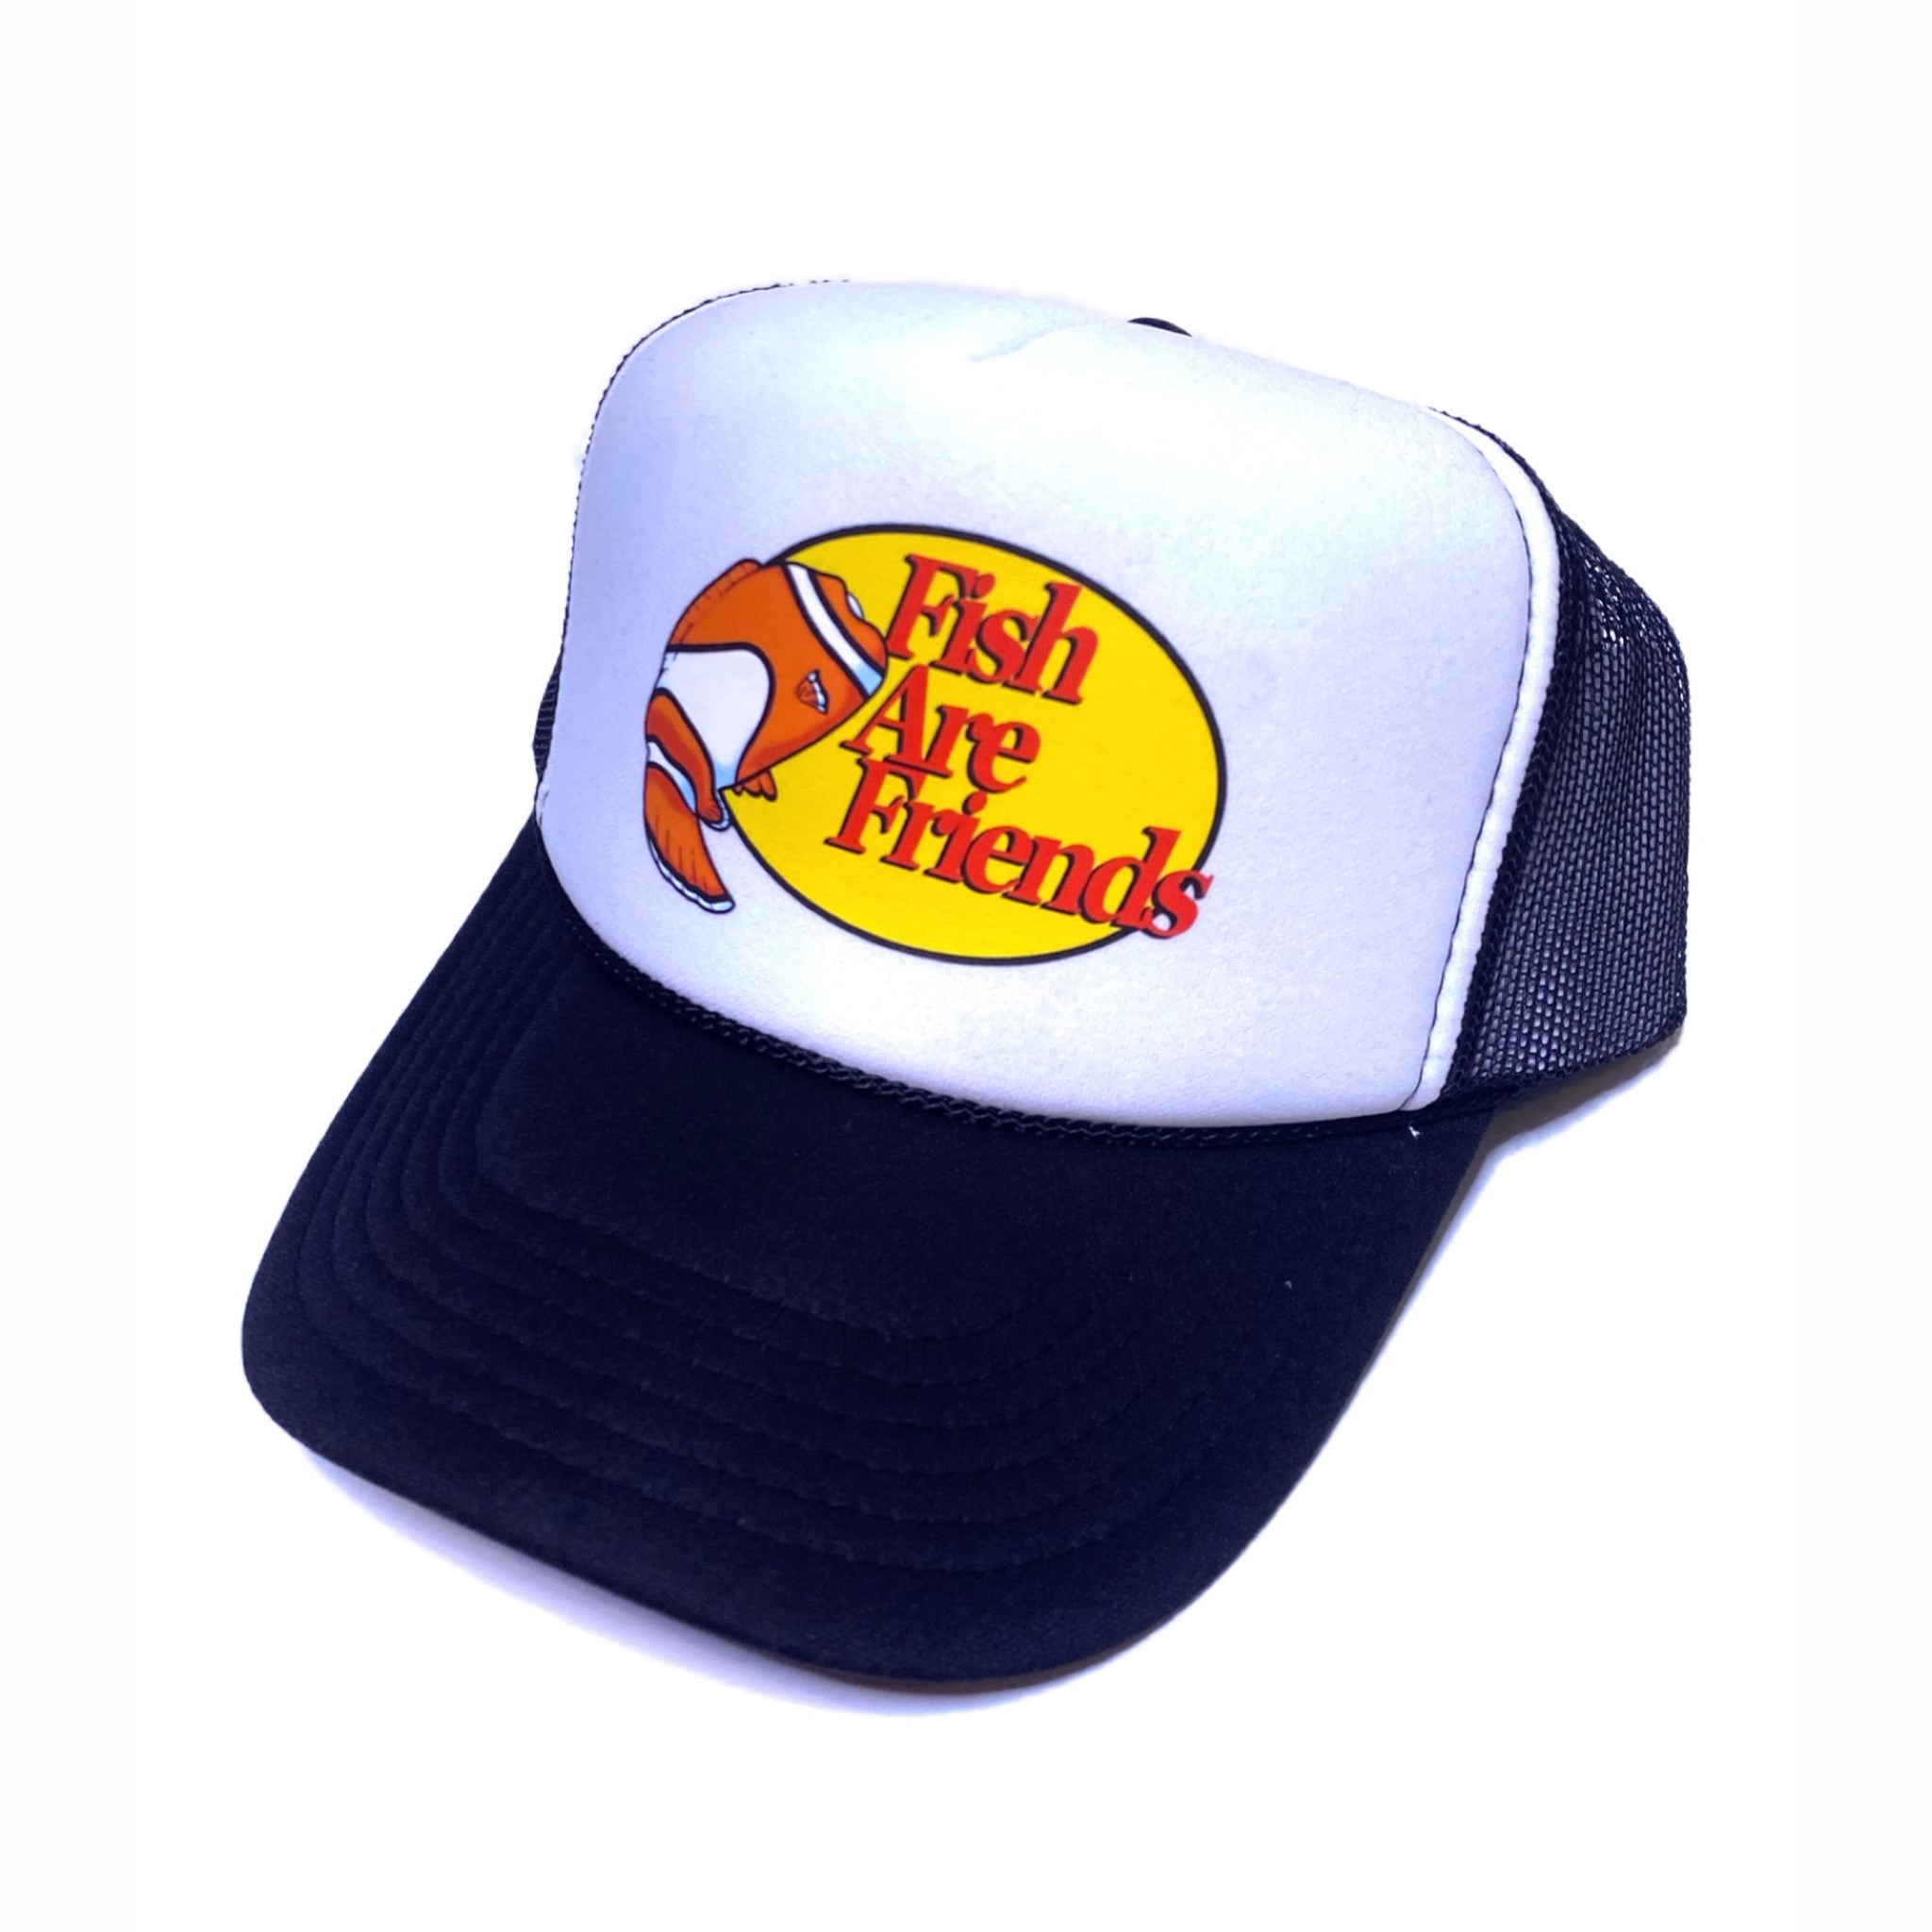 Fish Are Friends Trucker Hat - Orange - The Lost Bros